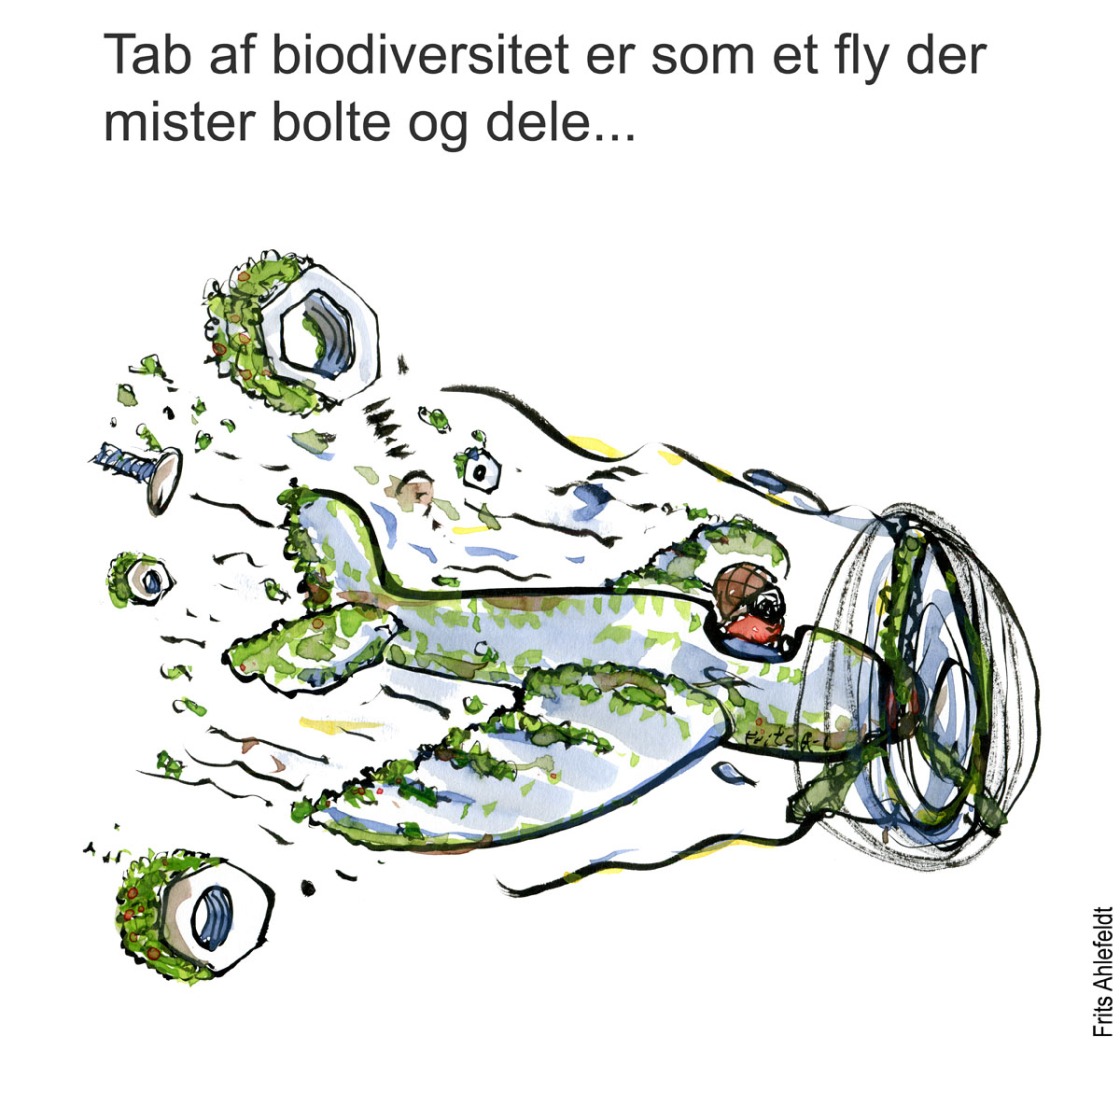 Di1246 Biodiversitet som fly